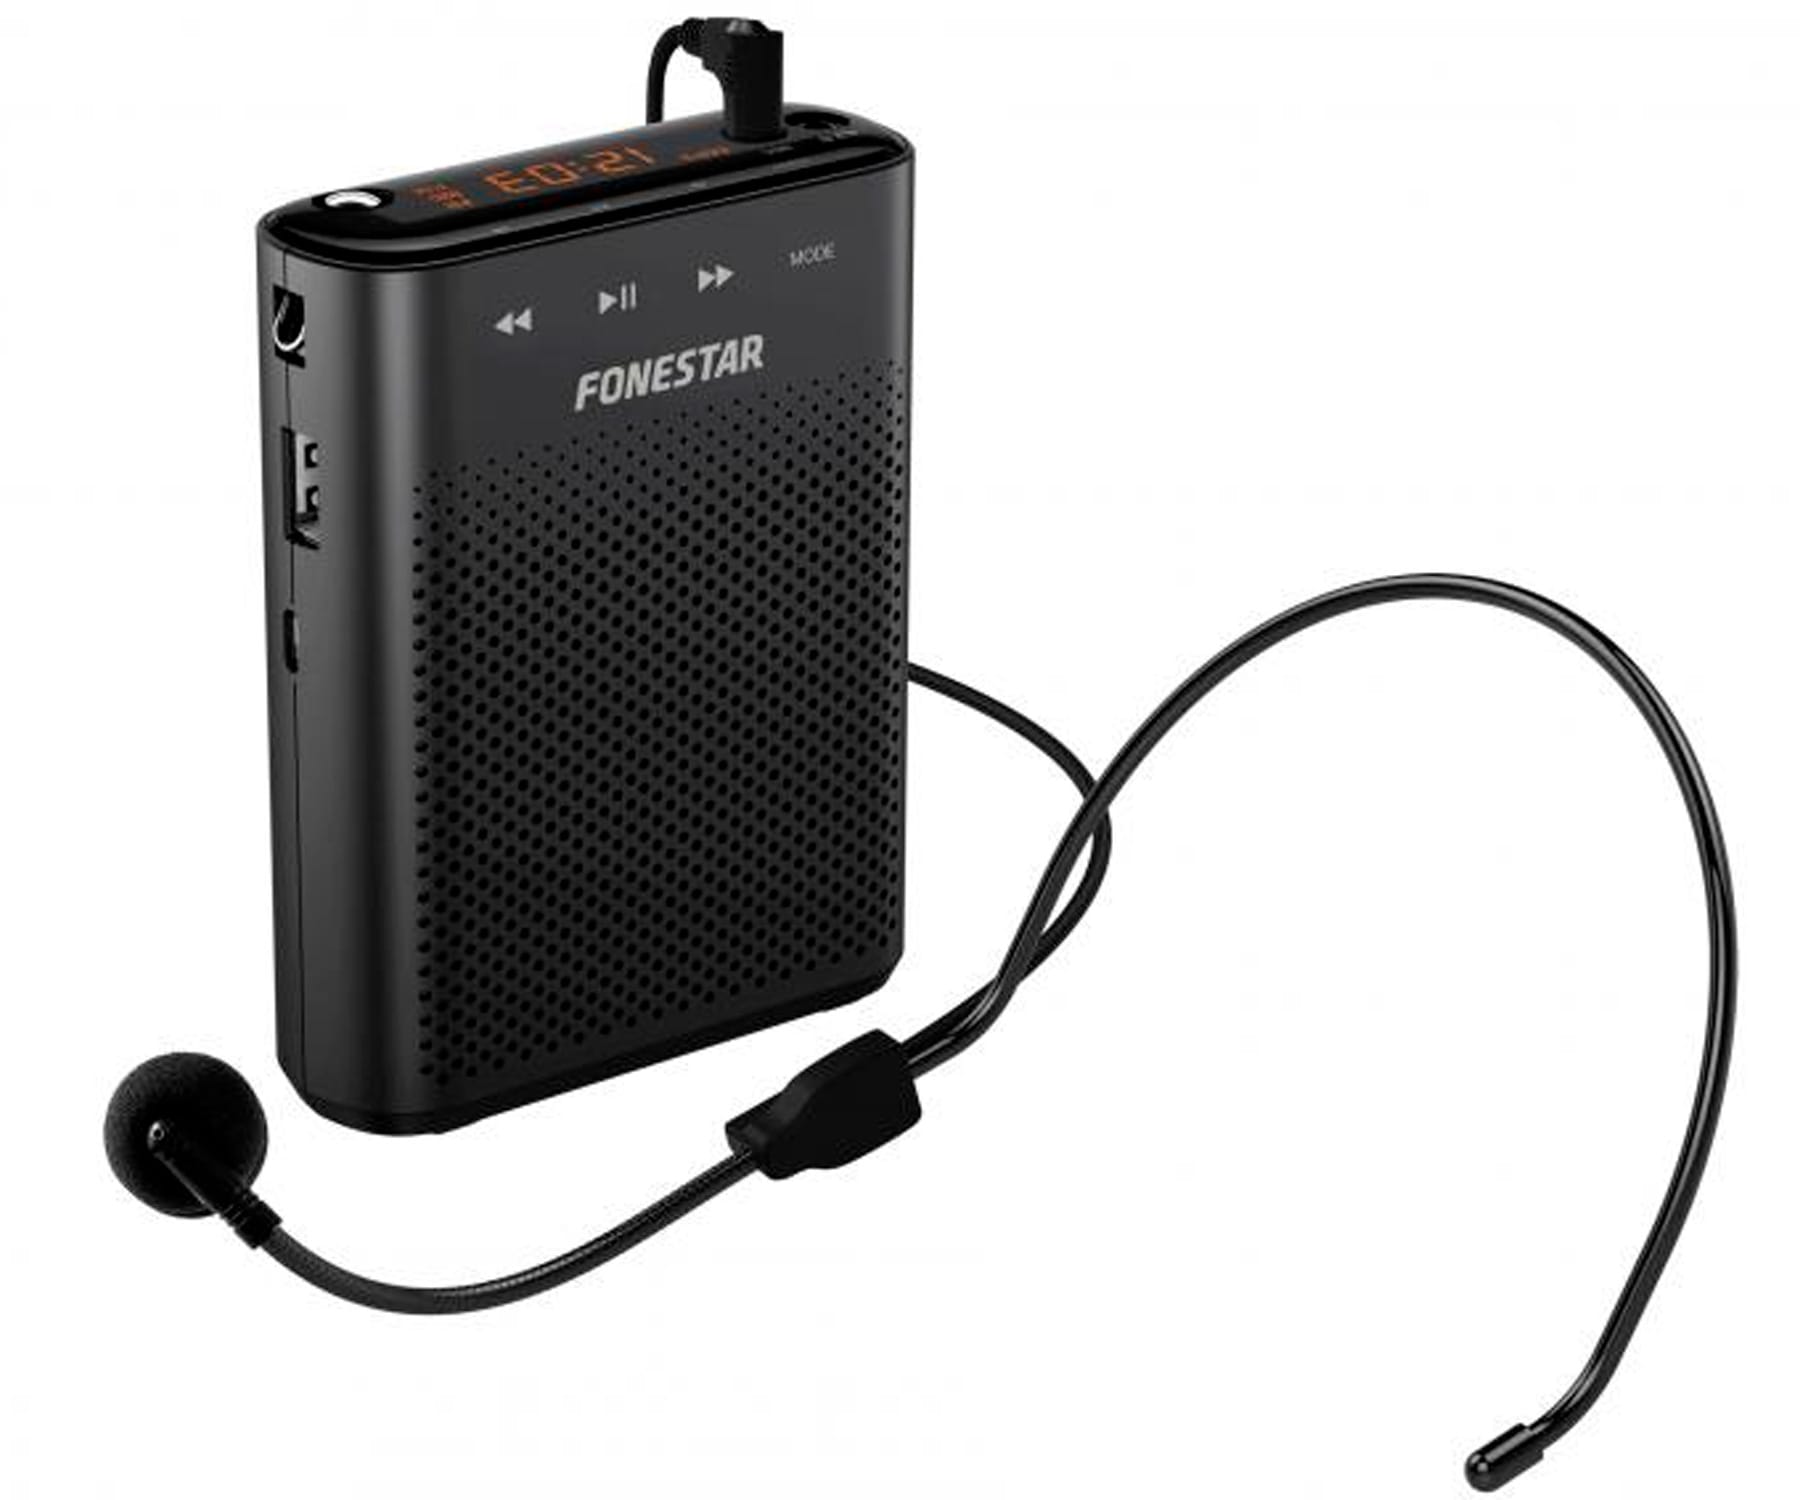 FONESTAR ALTA-VOZ-30 Black / Amplificador portátil para cintura con micrófono